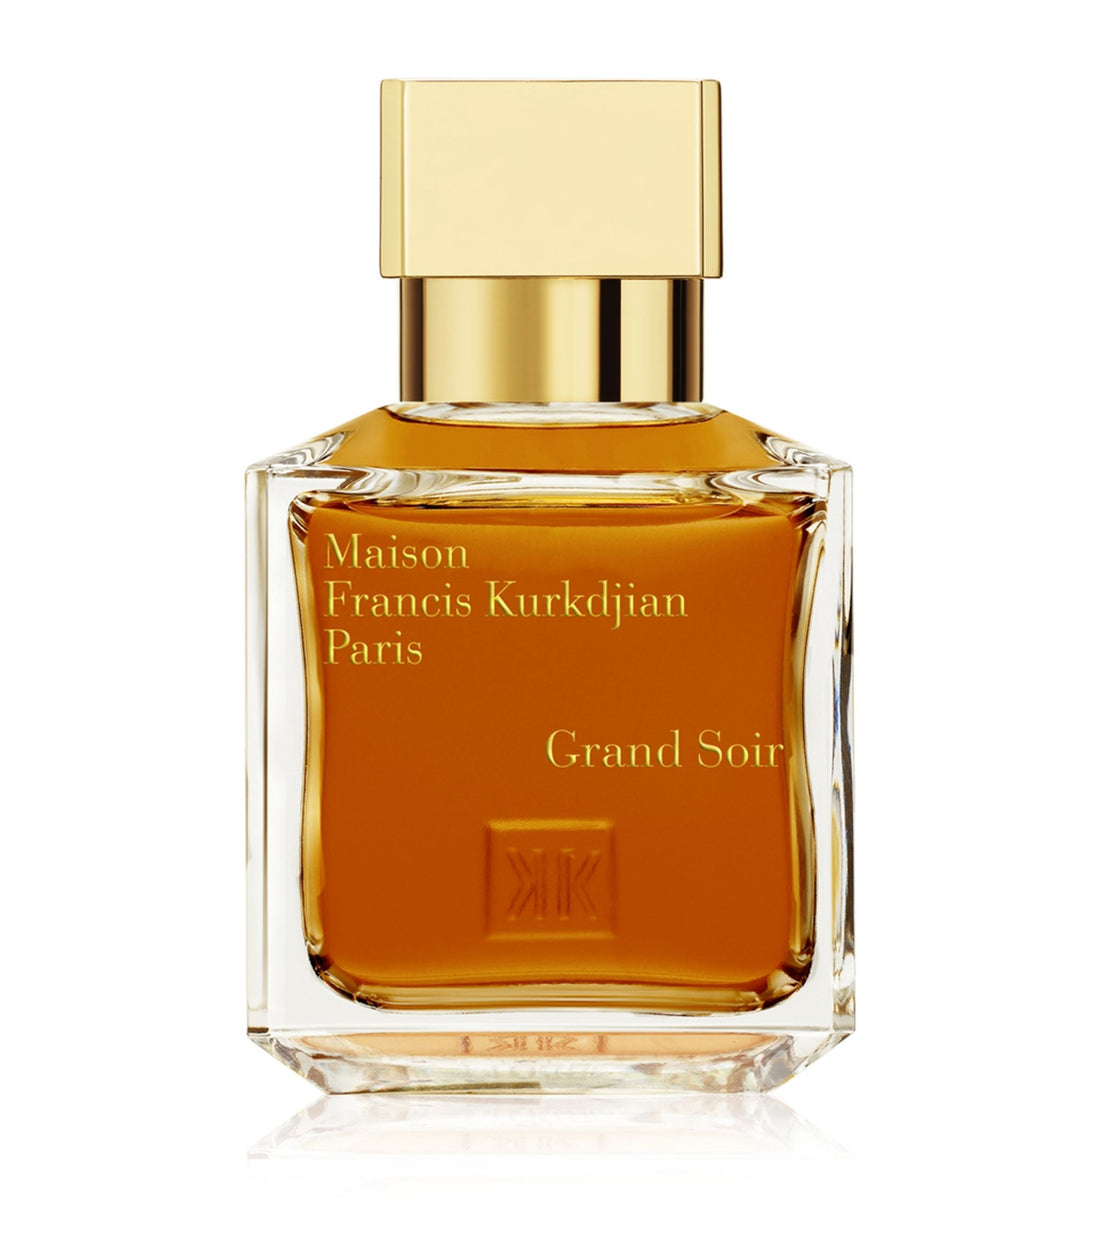 Maison Francis Kurkdjian Grand Soir Eau De Parfum Fragrance Samples